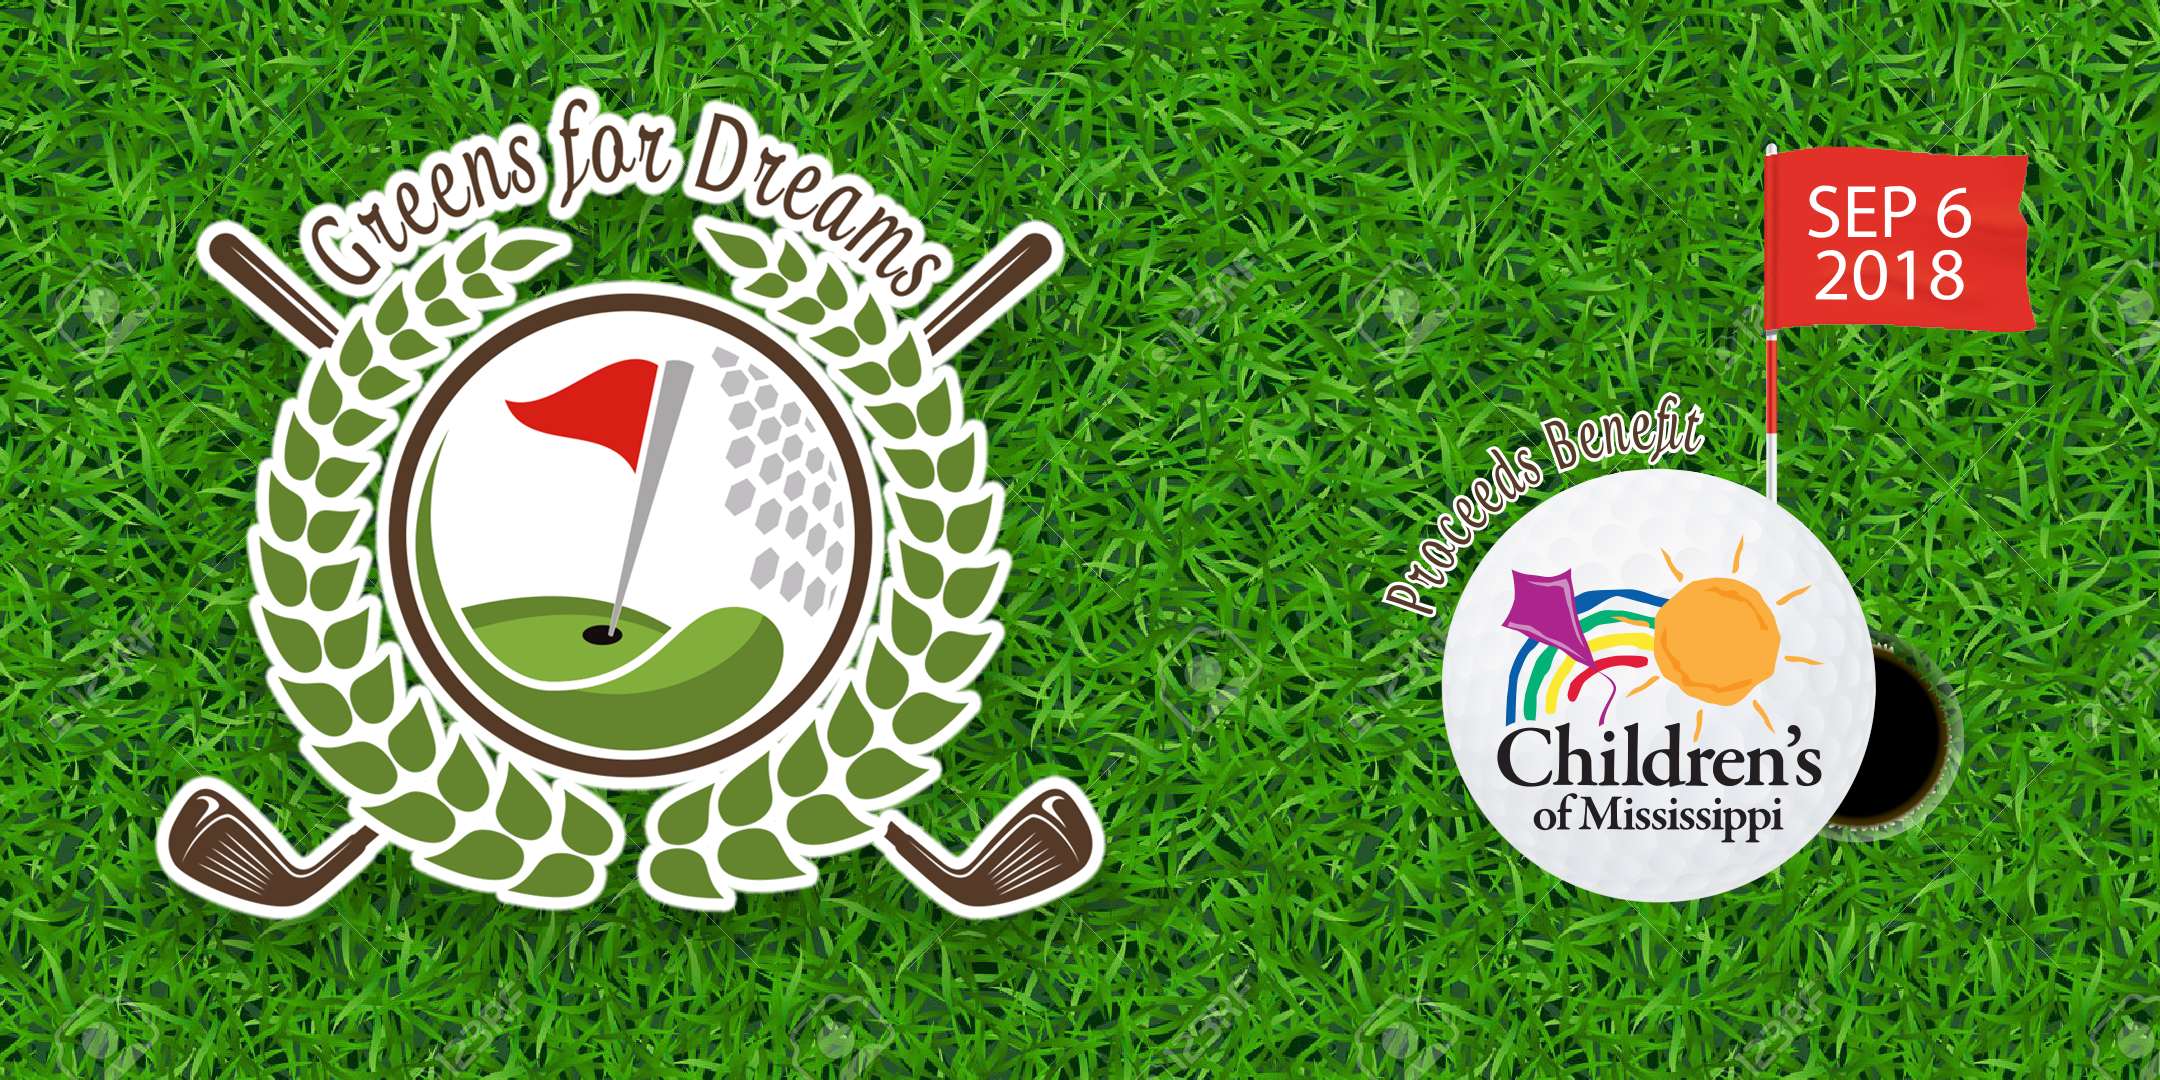 Greens for Dreams Golf Tournament